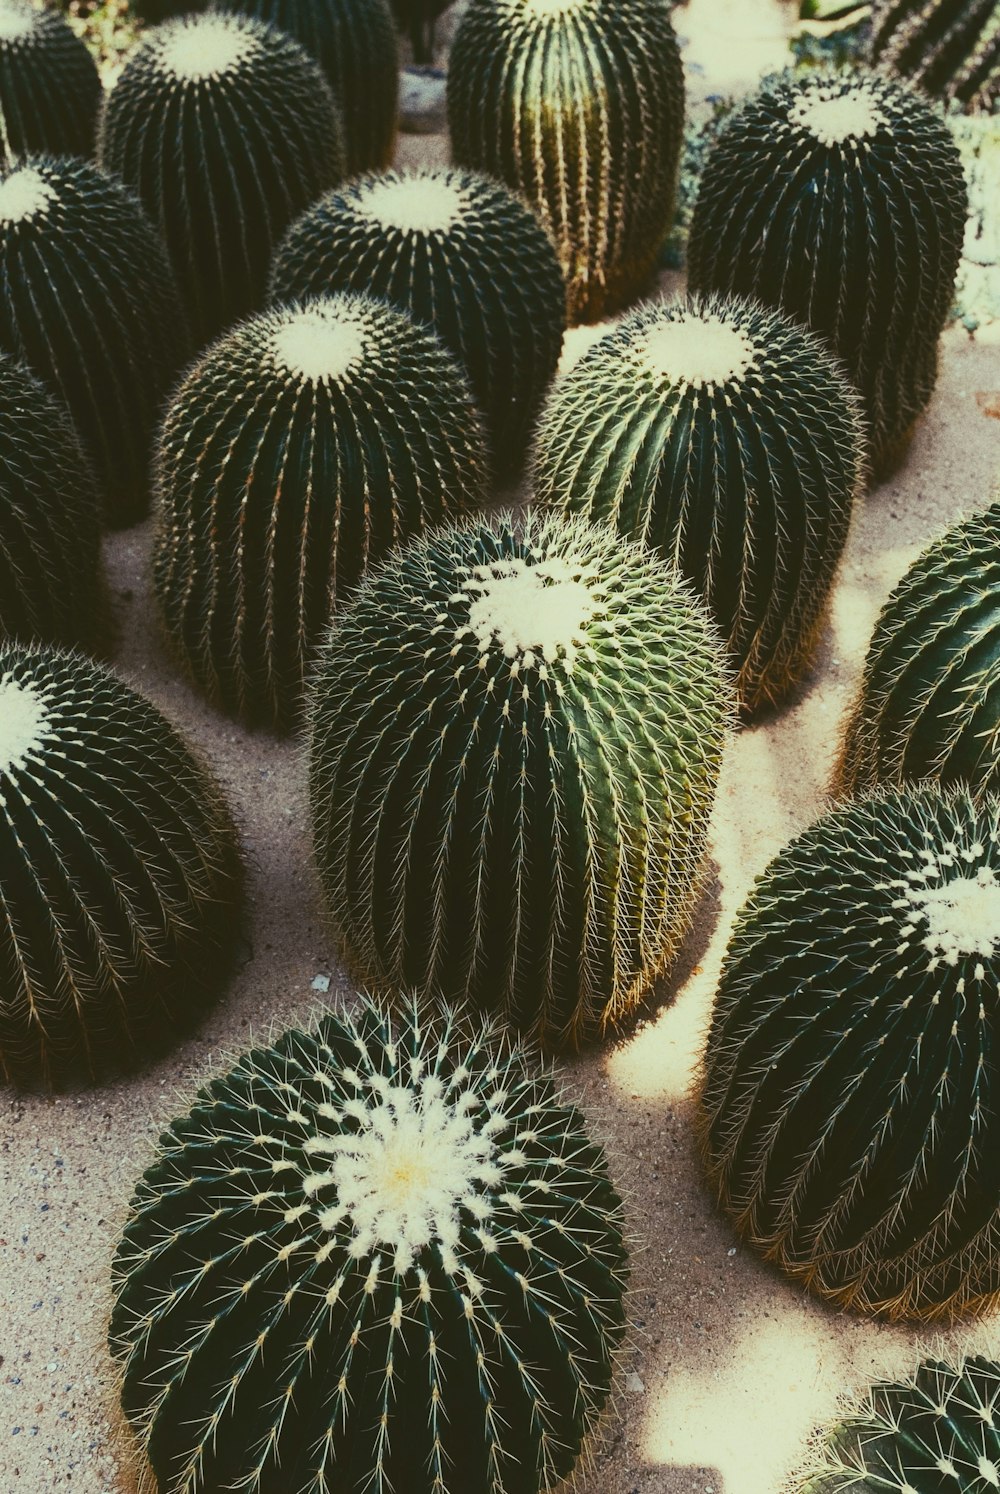 green cactus plants on gray sand